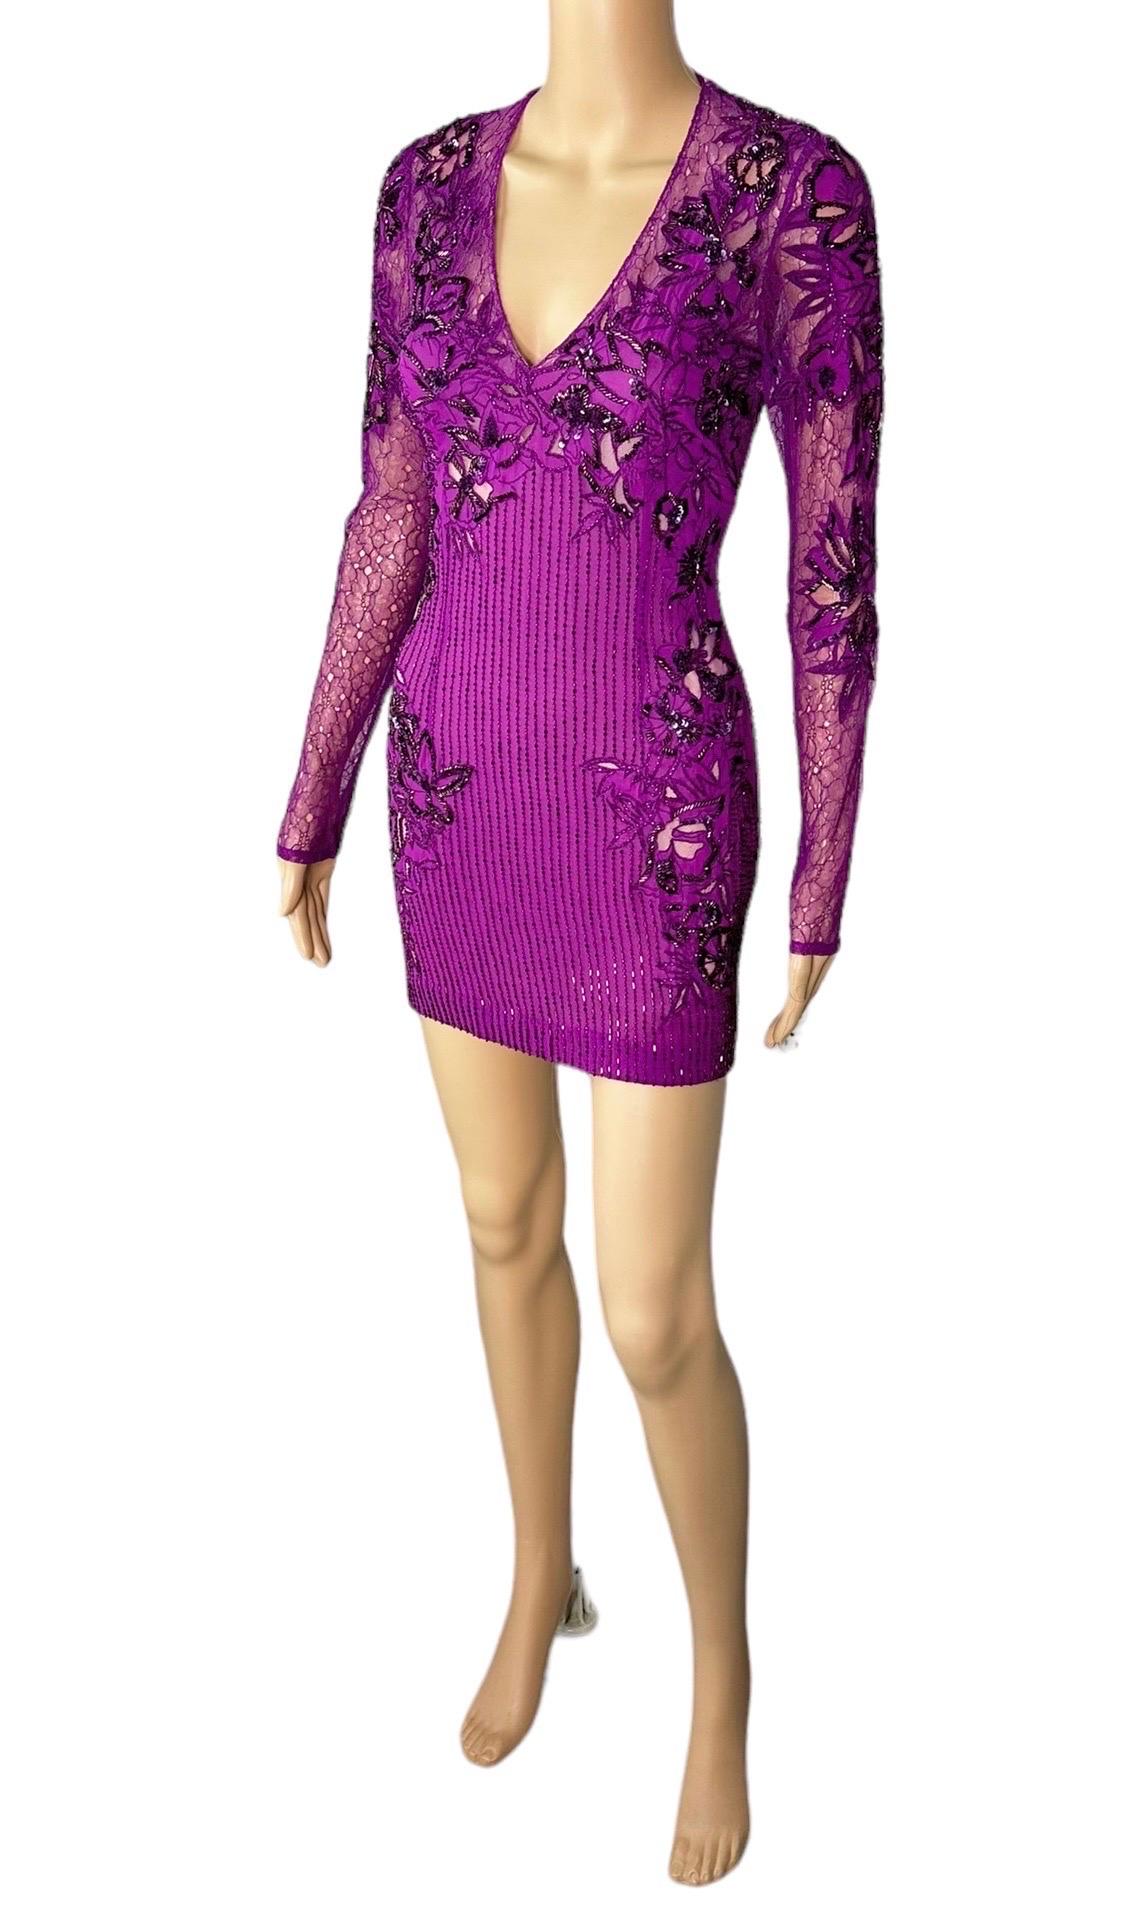 Roberto Cavalli Unworn S/S 2016 Embellished Sheer Lace Mesh Mini Dress For Sale 4